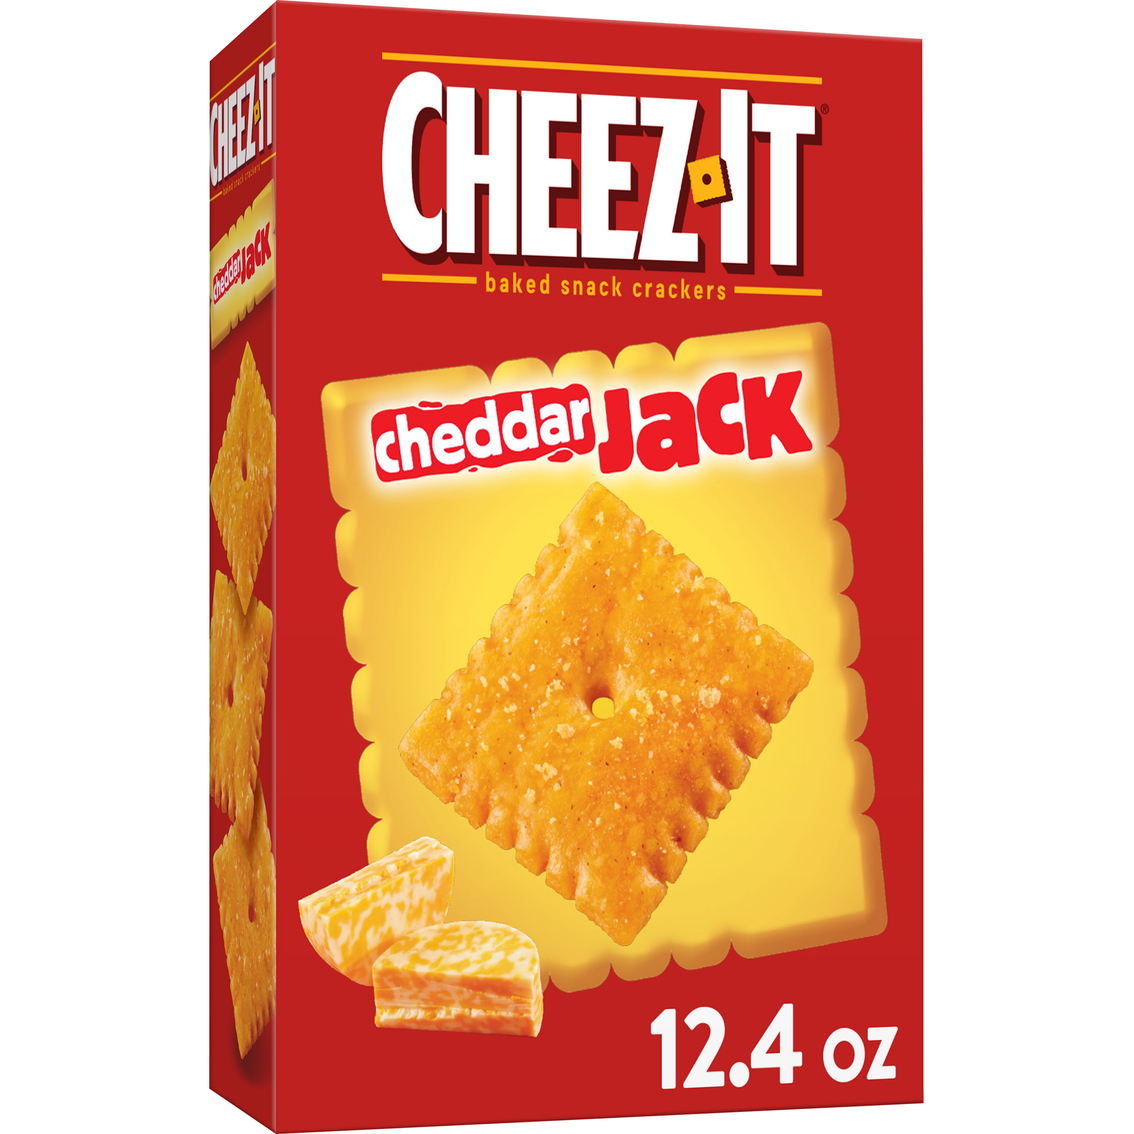 Kellogg's Cheez It Cheddar Jack Crackers 12.4 oz.